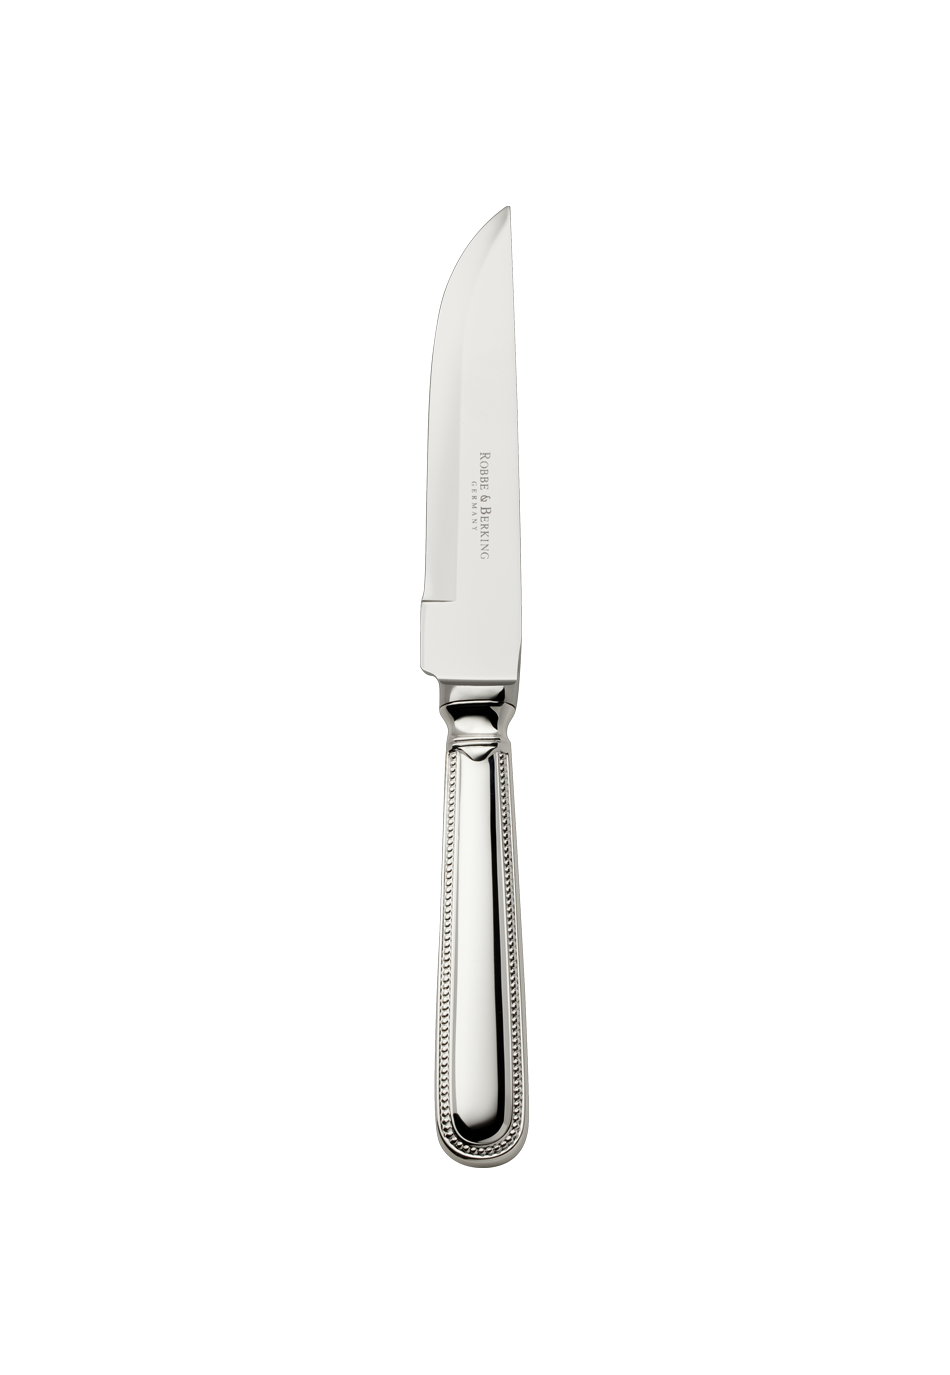 Franz. Perl Steak Knife (150g massive silverplated)